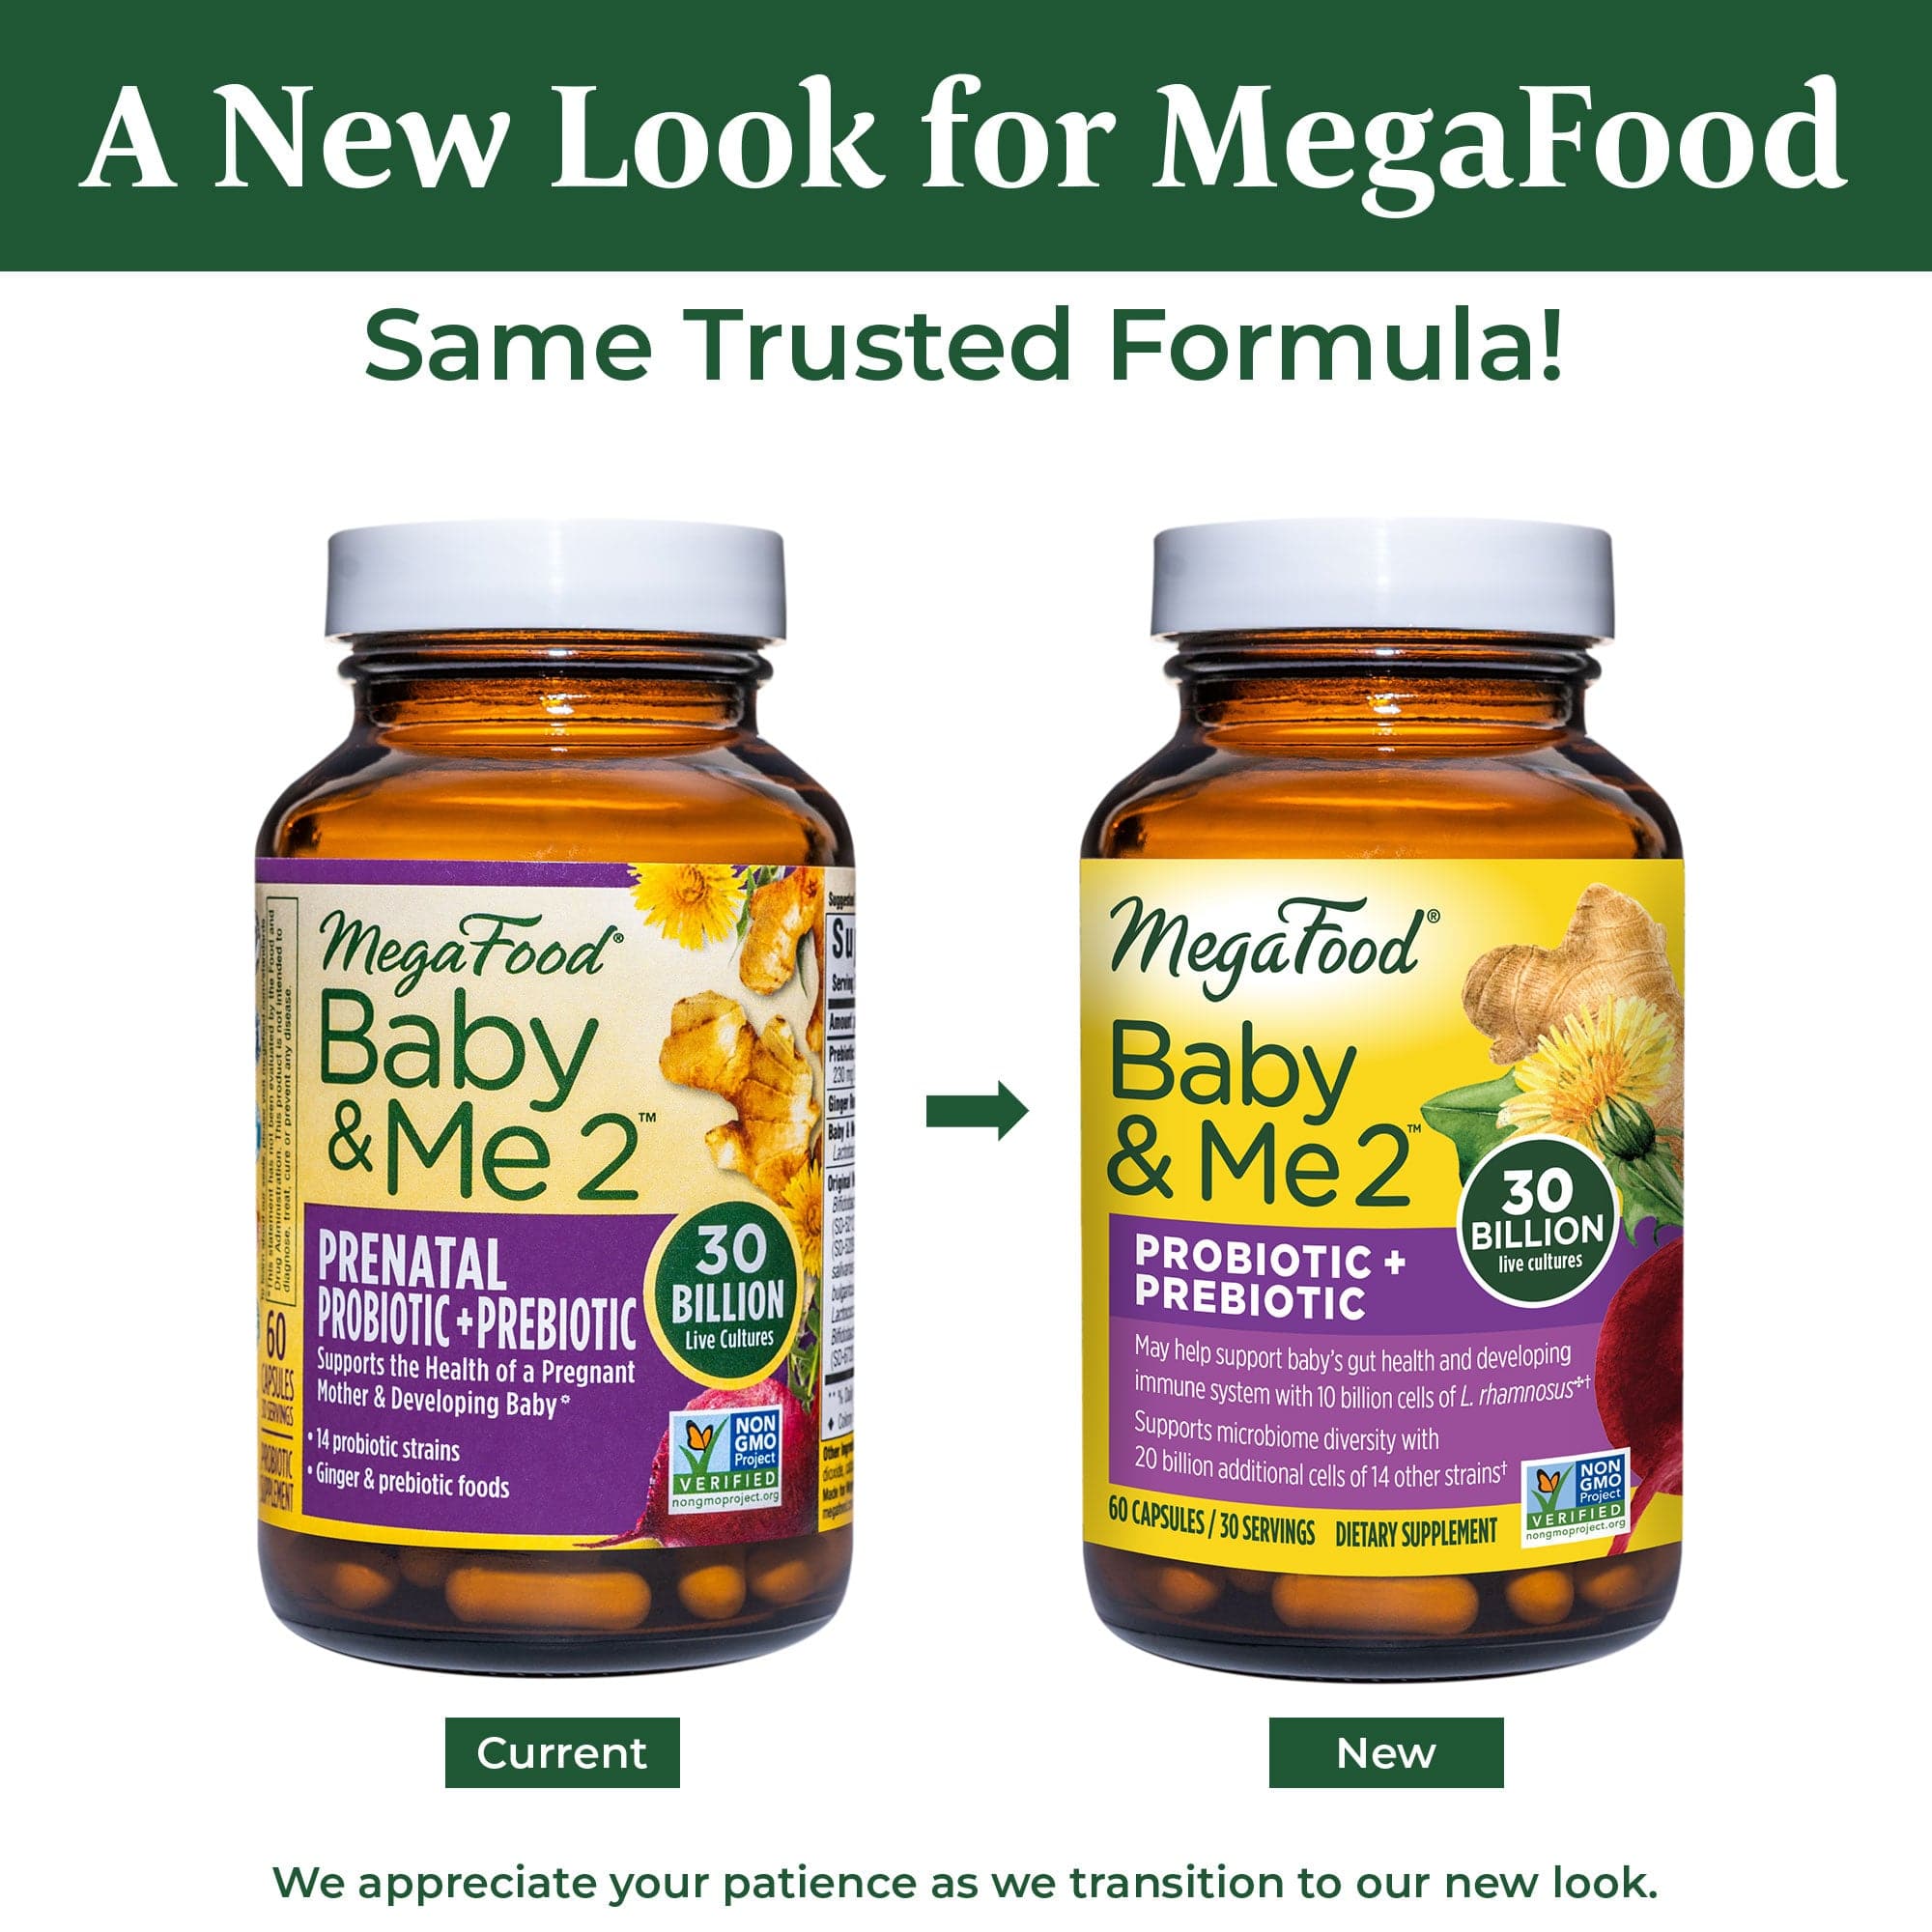 MegaFood Baby & Me 2 Prenatal Probiotic + Prebiotic